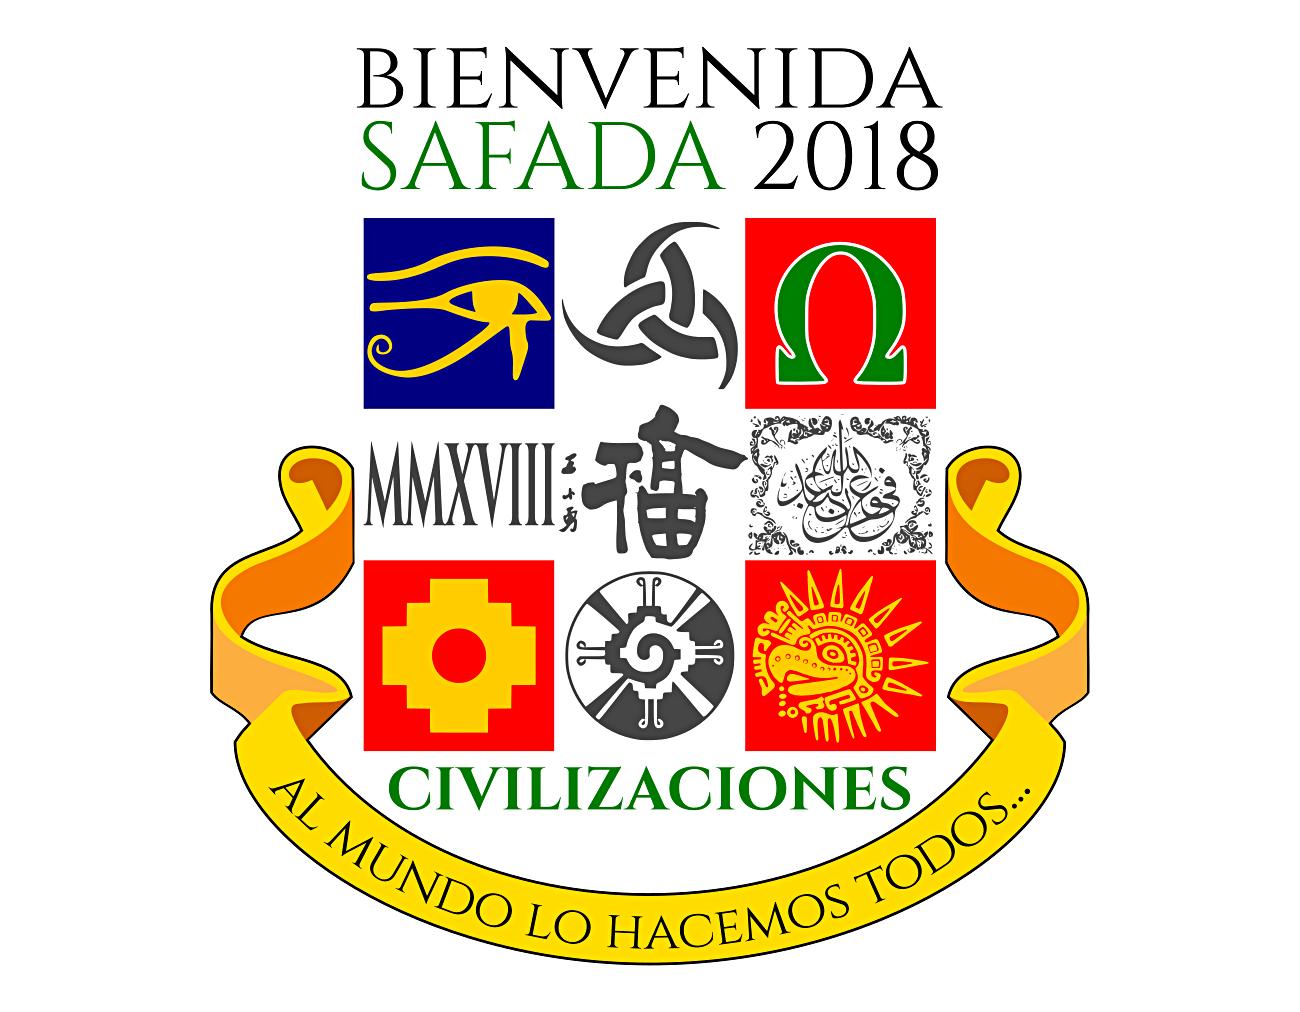 Bienvenida Safada 2018